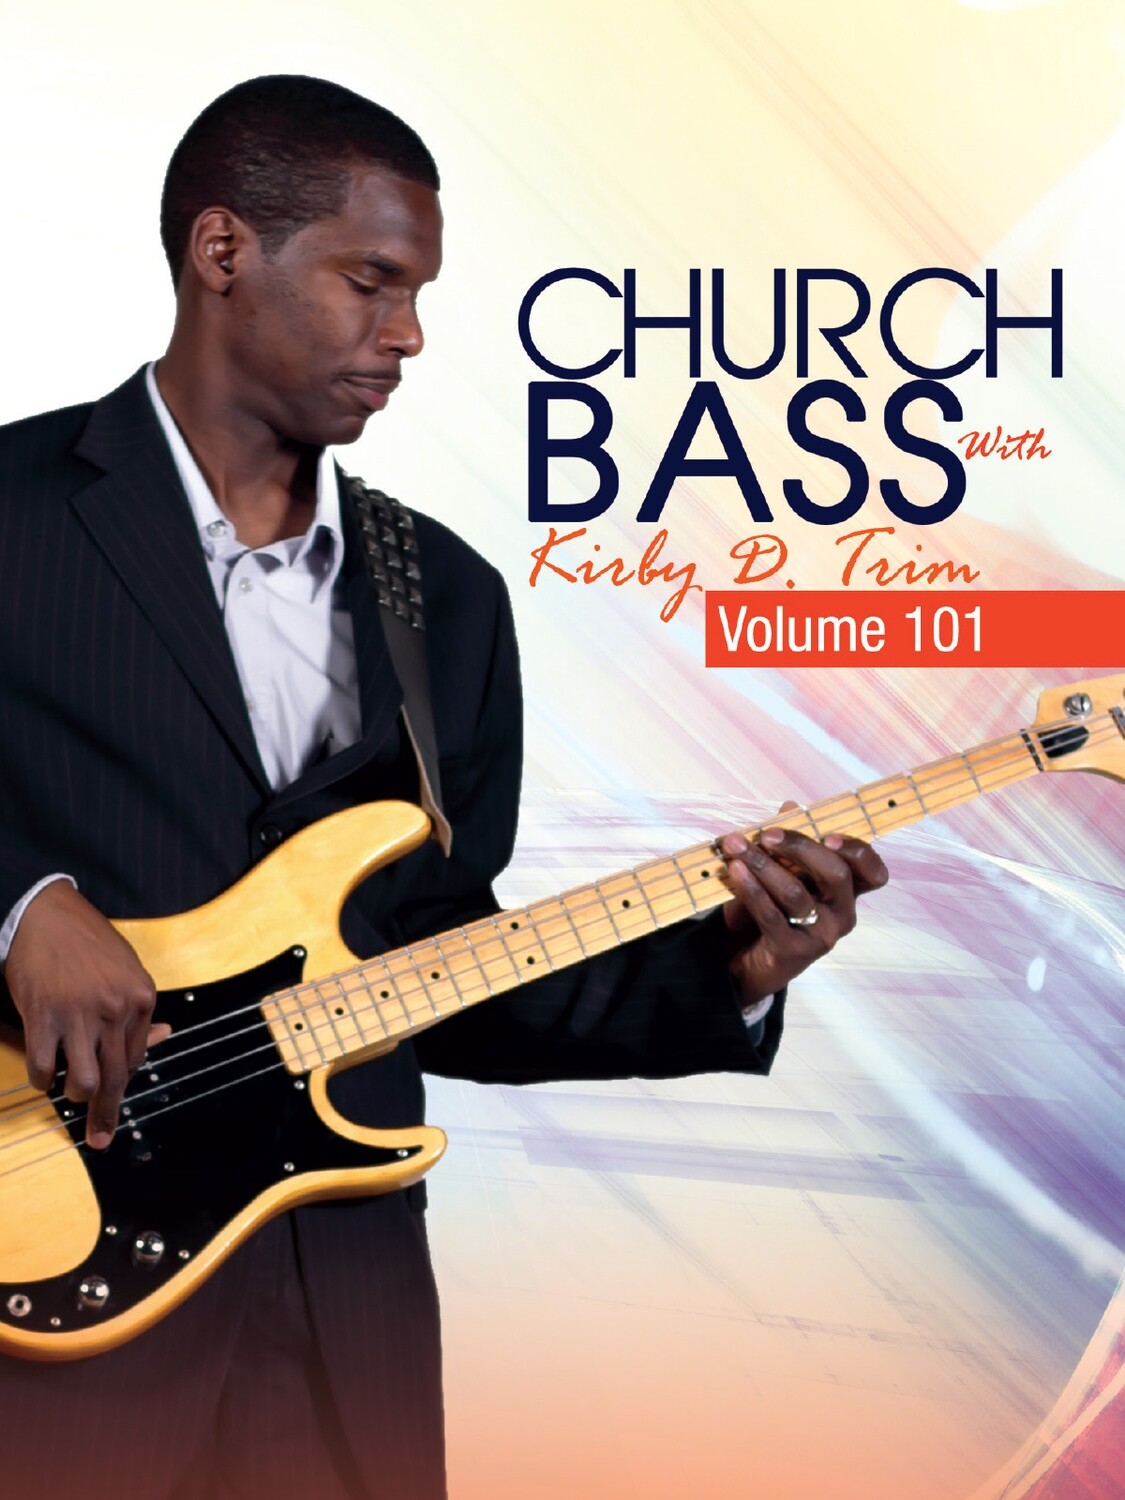 Church Bass with Kirby D. Trim Vol. 101 - Instructional Video DVD